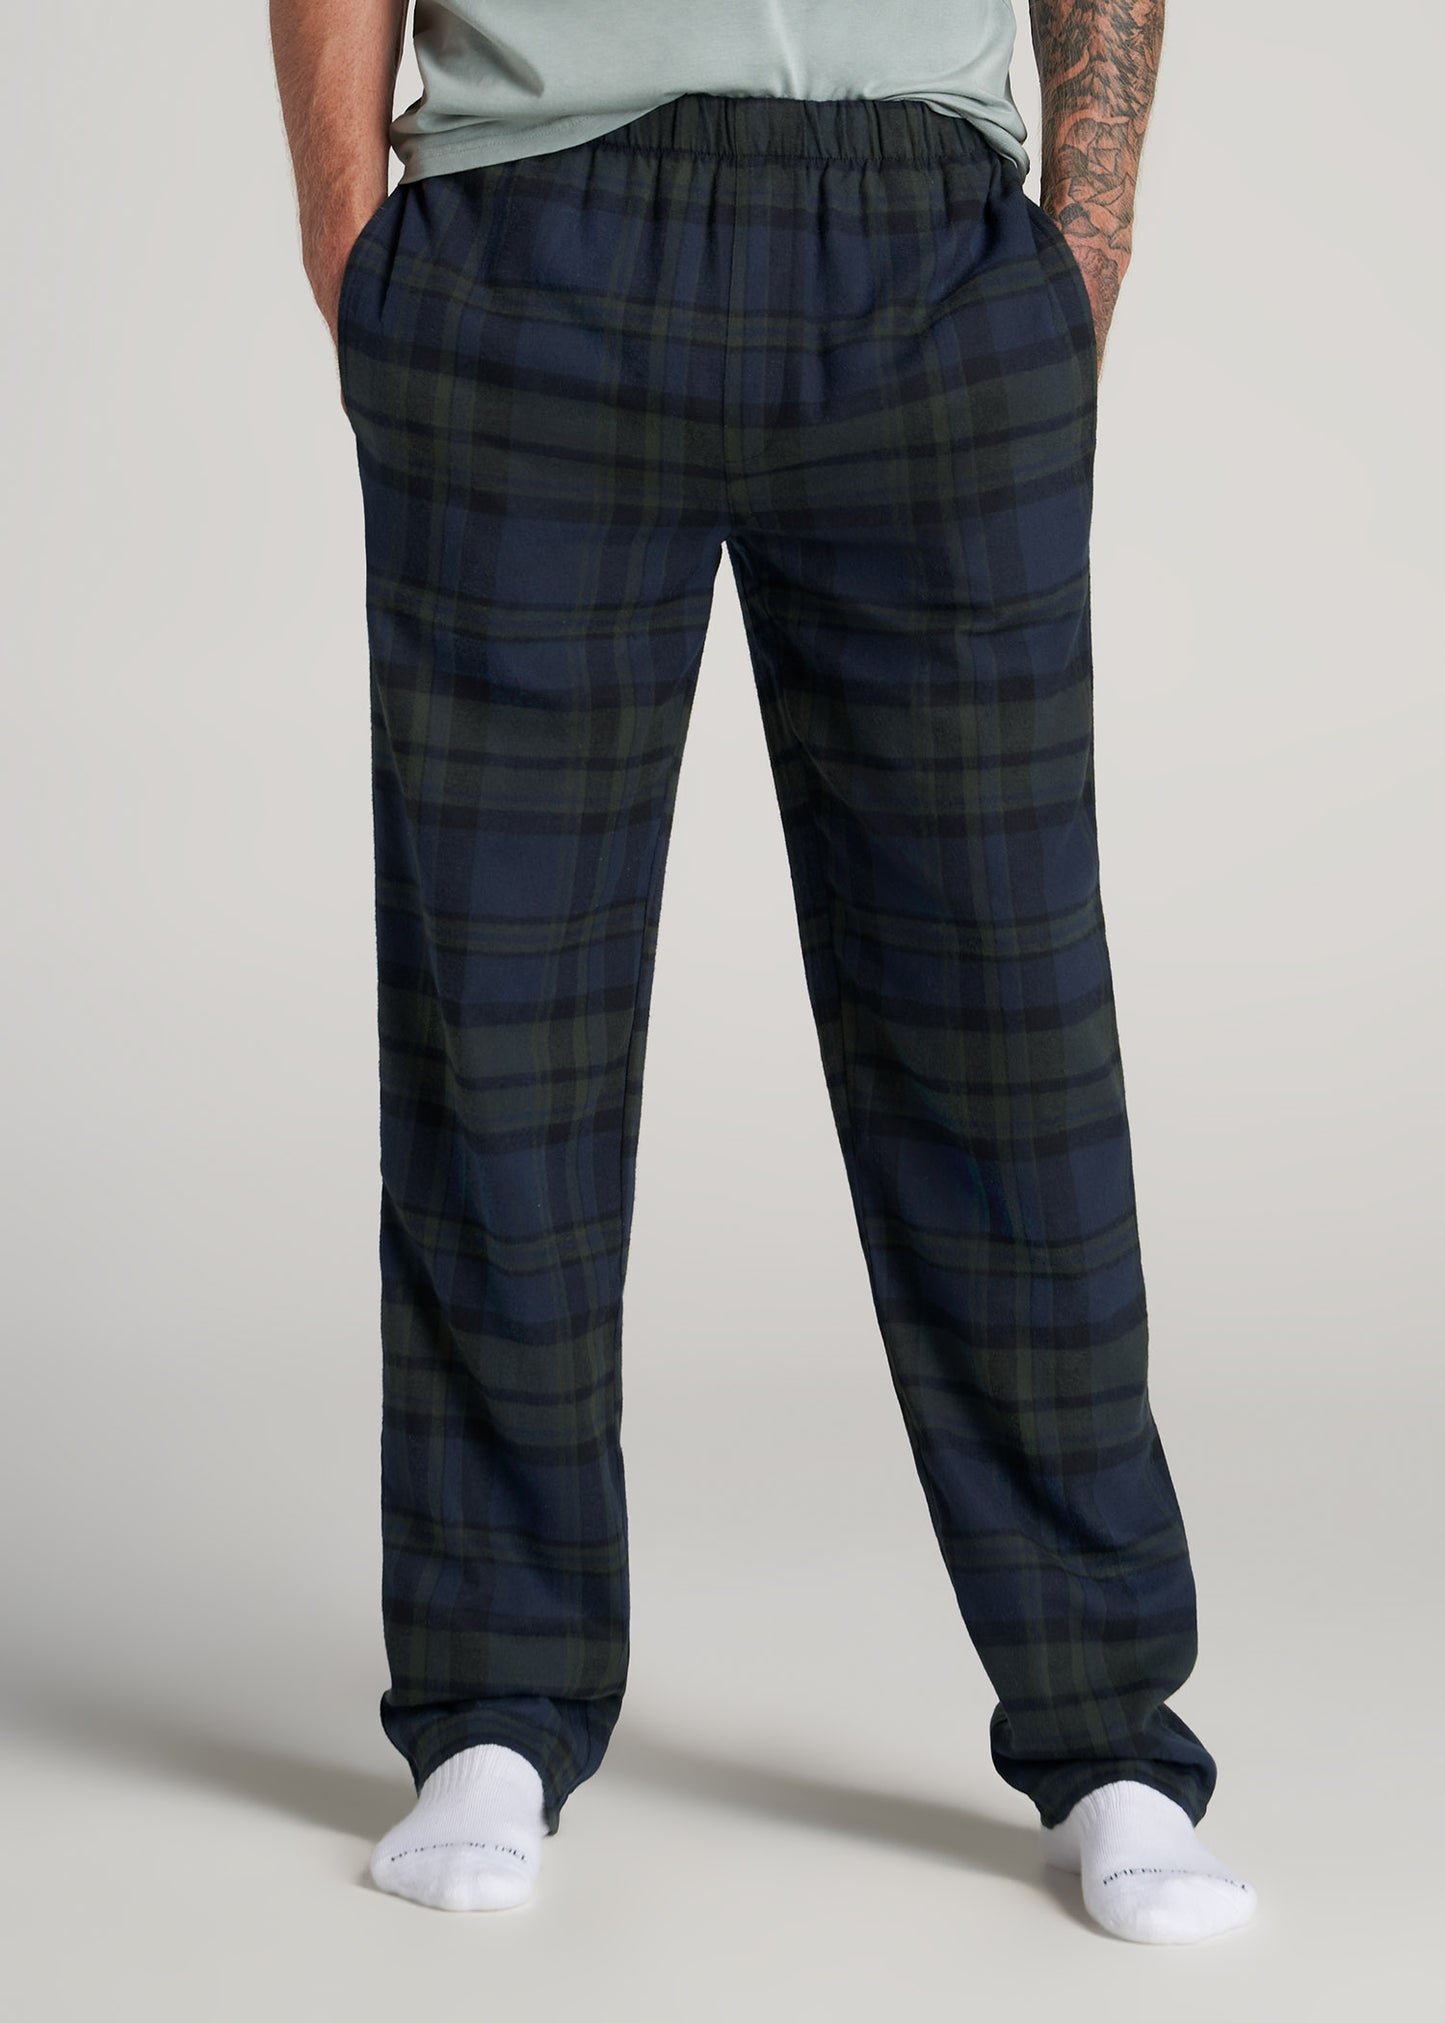 Plaid Pajama Pants for Tall Men in Olive & Dark Cobalt Plaid